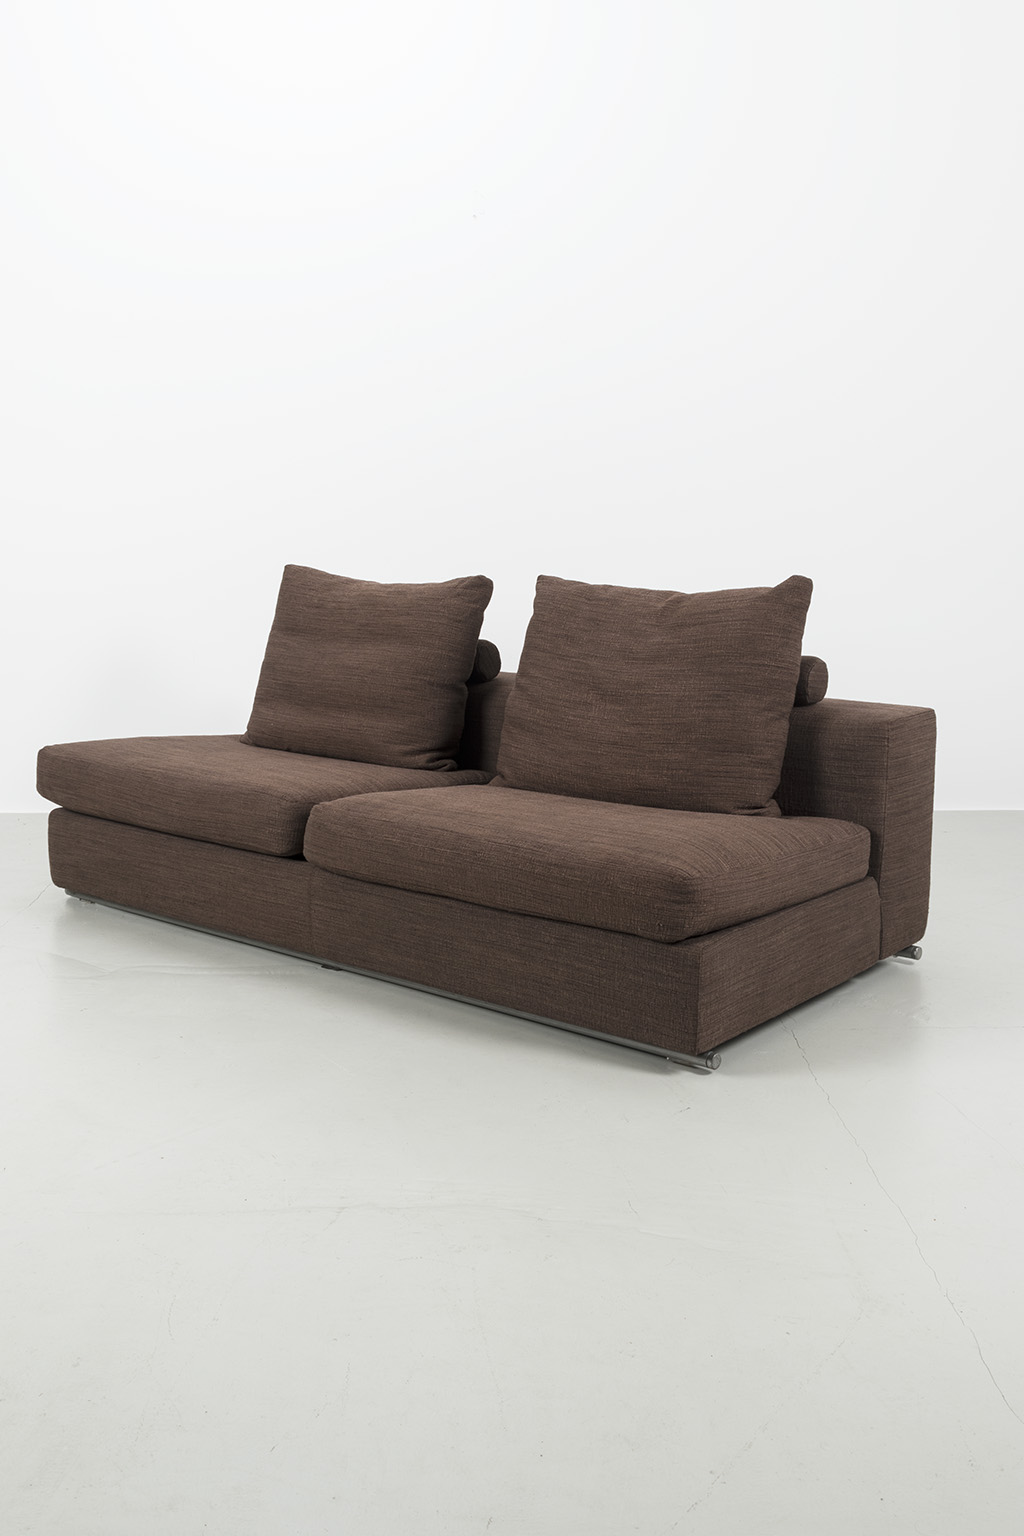 Flexform Groundpiece 2 seat sofa